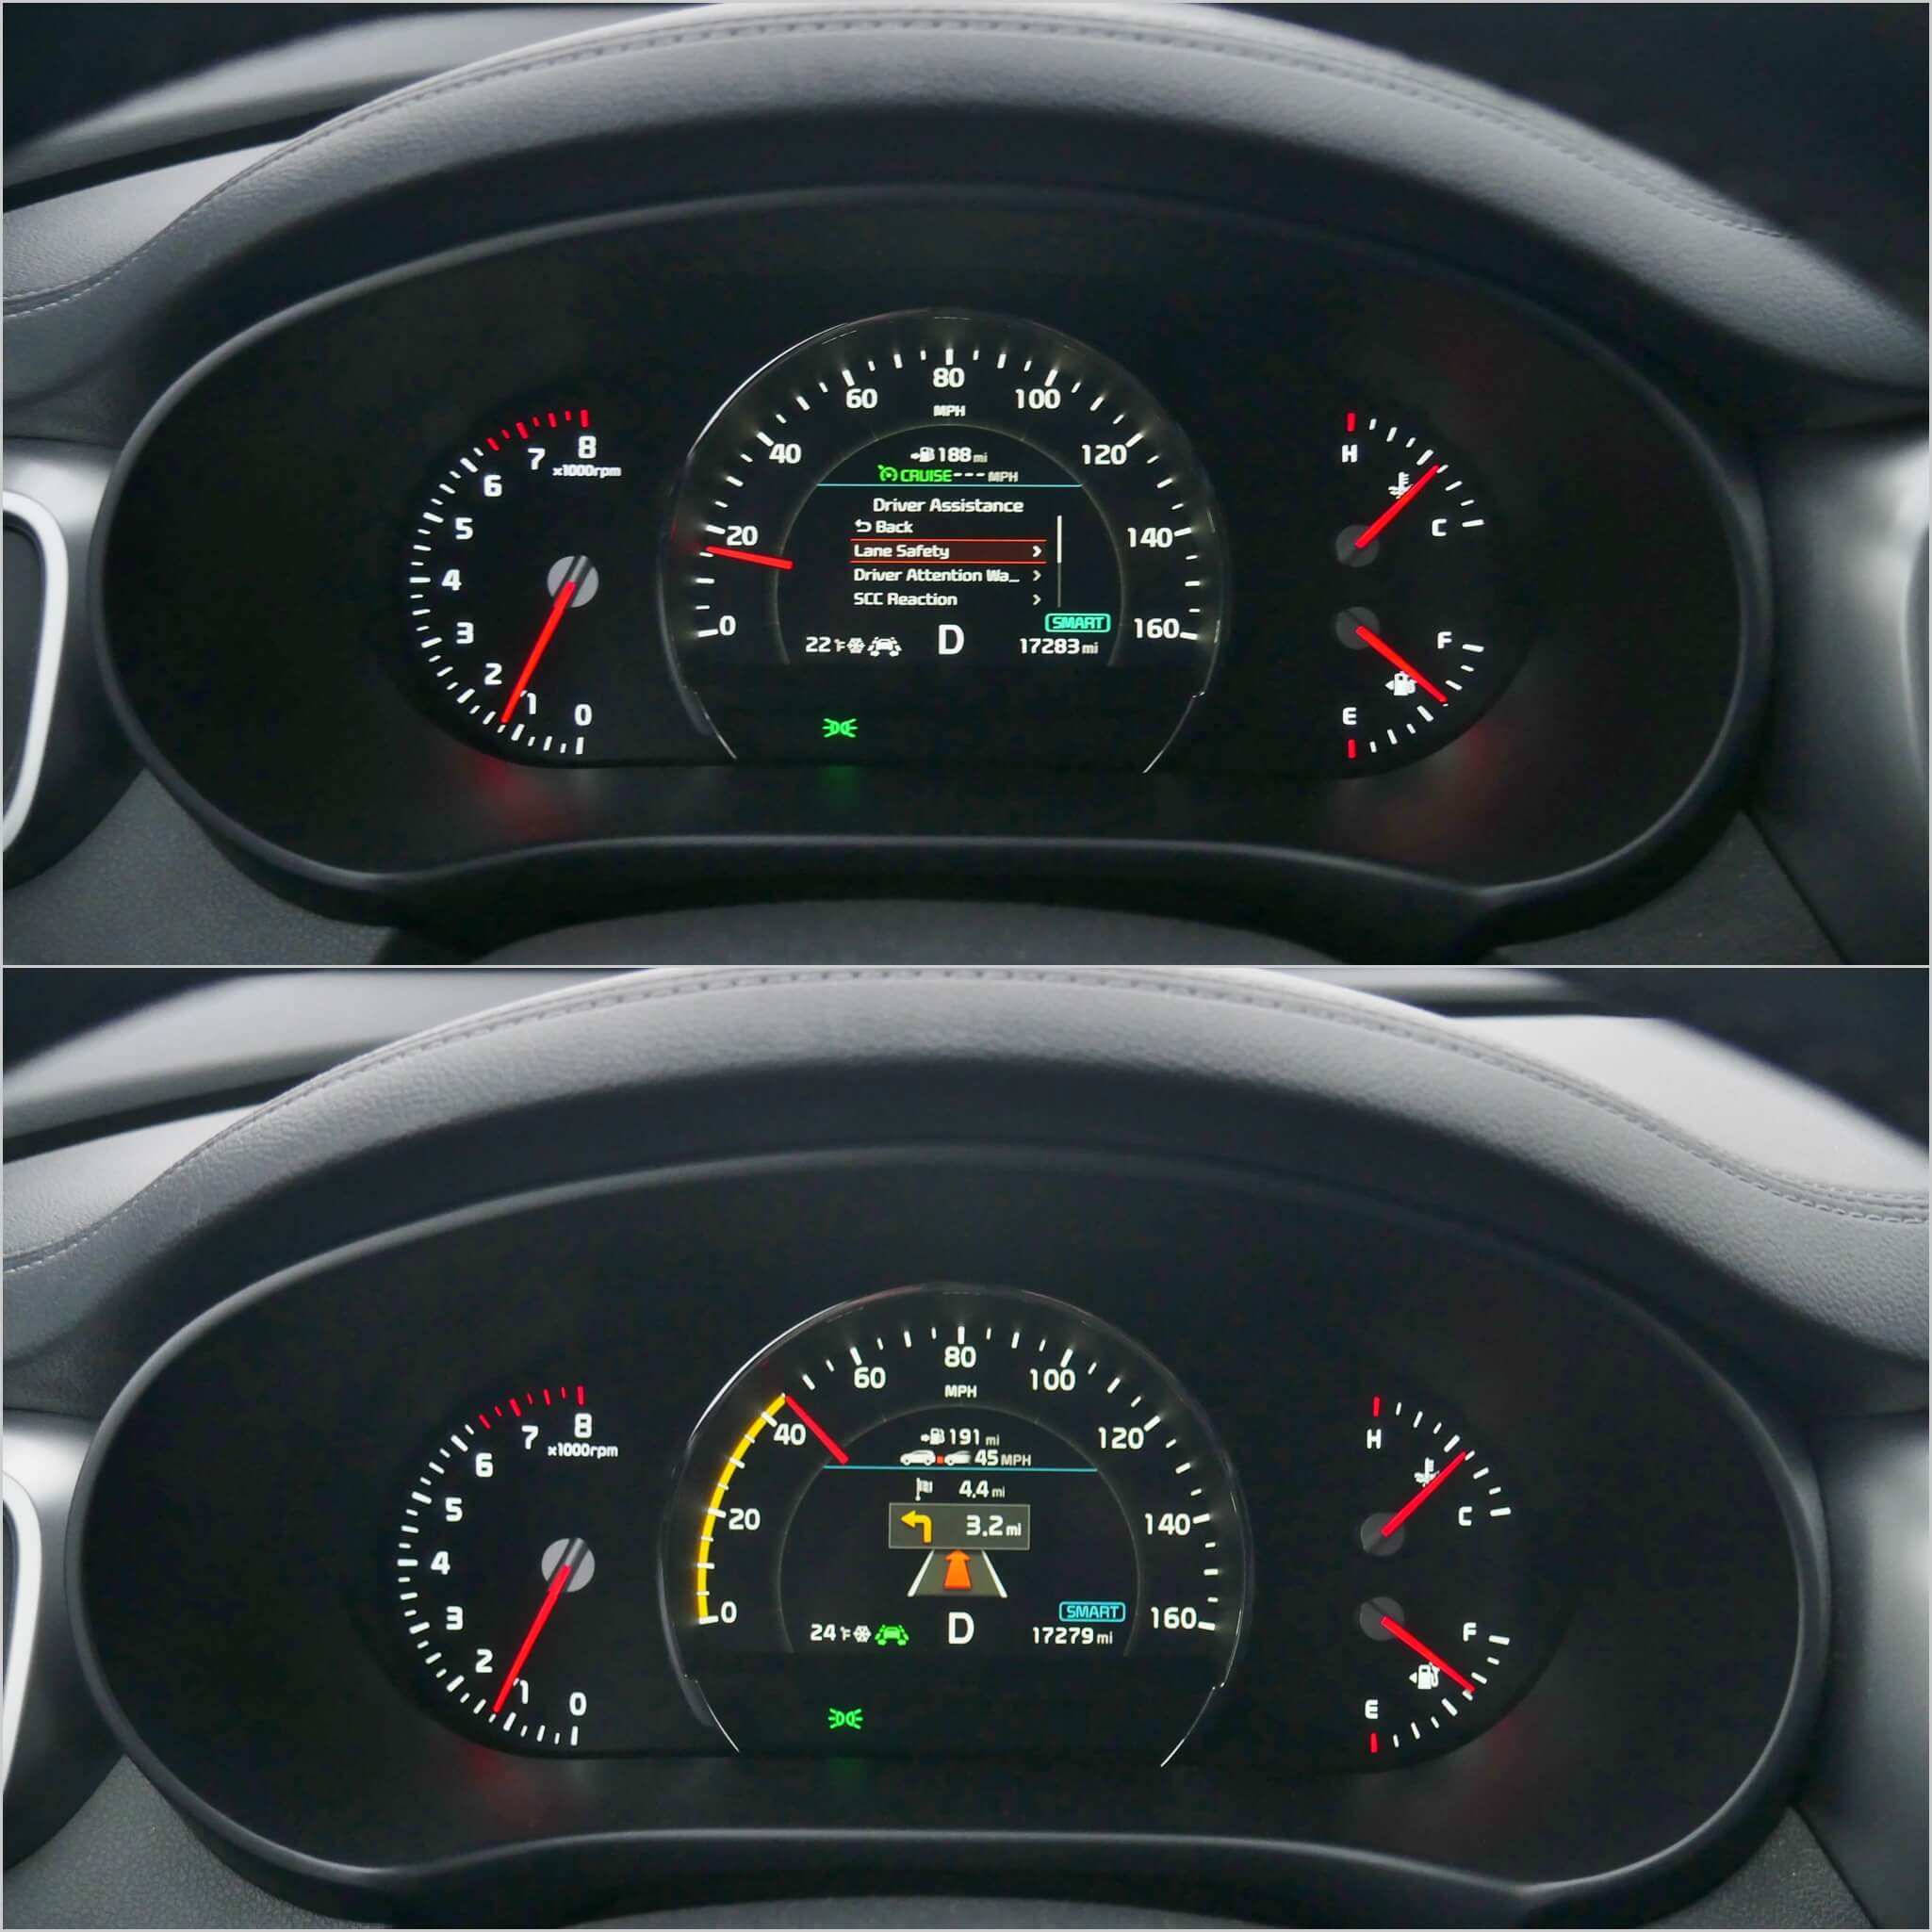 2019 Kia Sorento SXL AWD: Drive assist technology